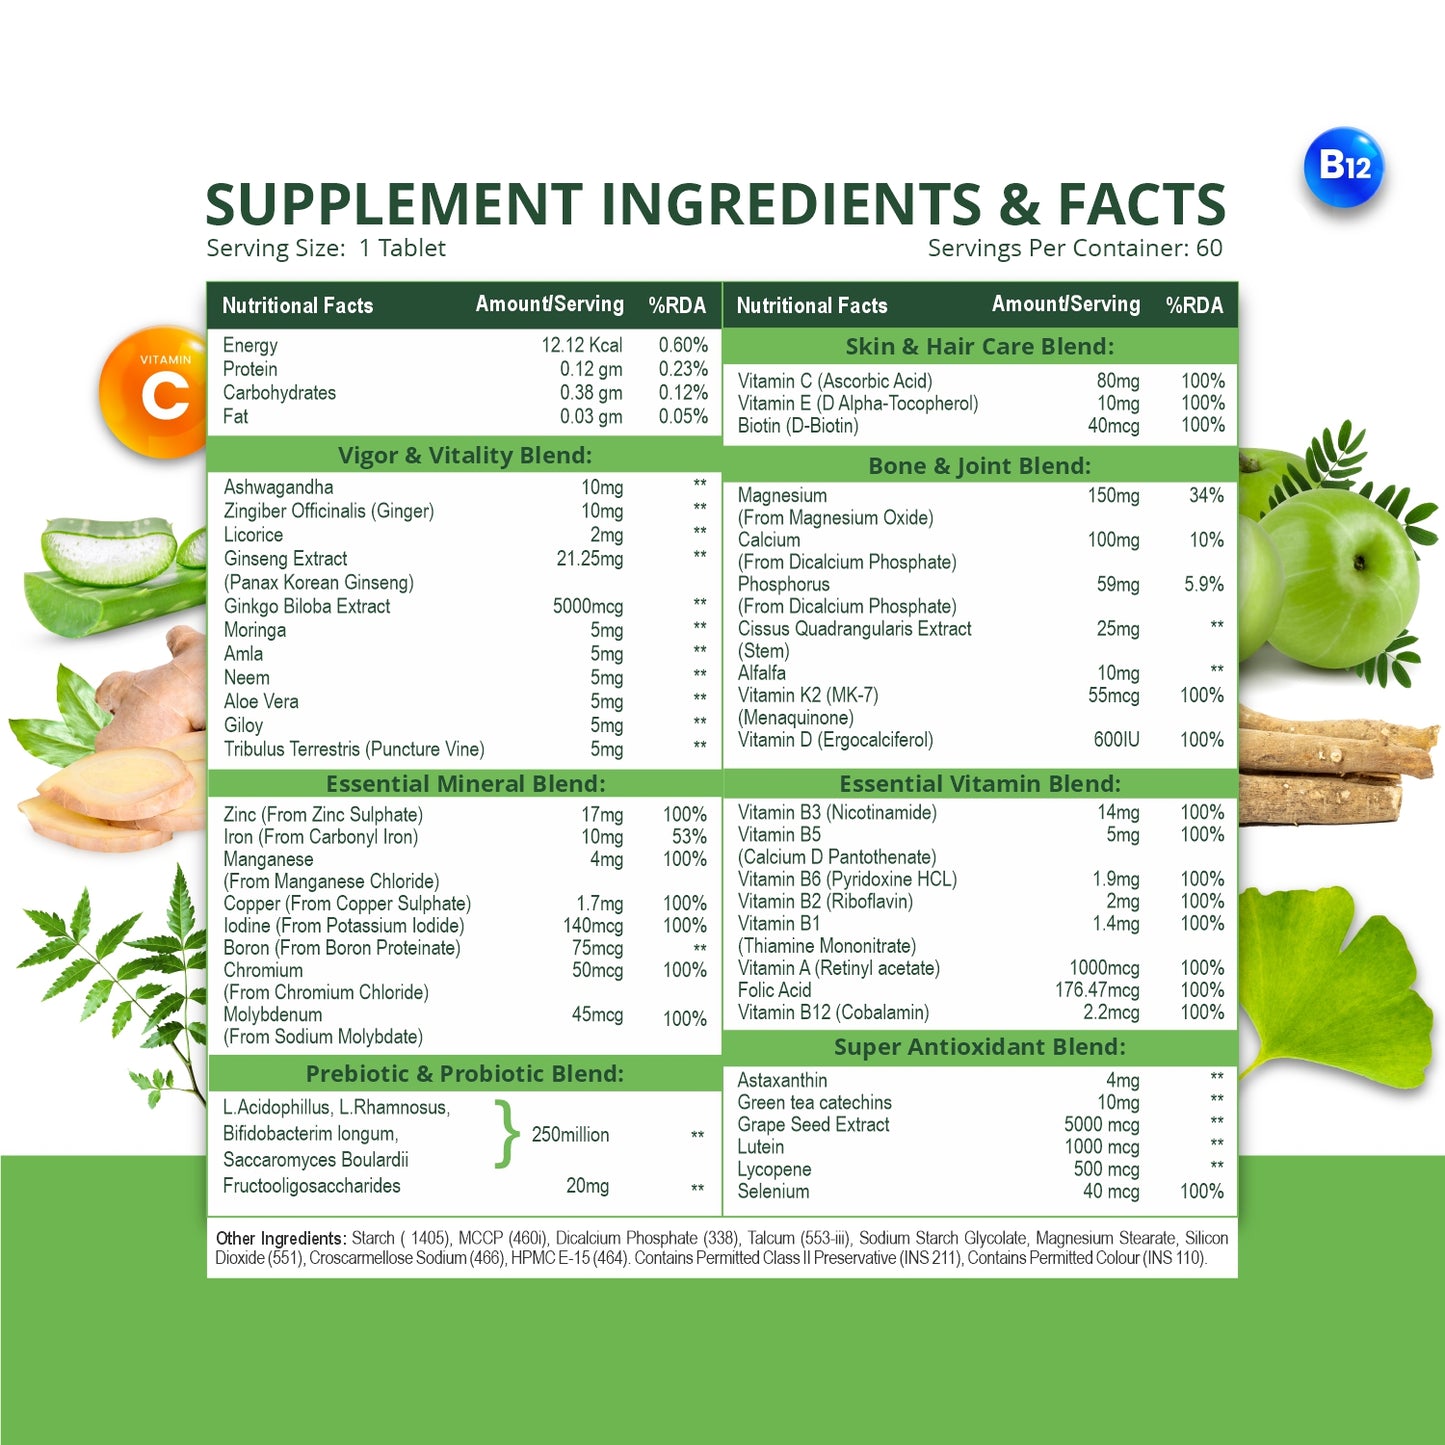 Himalayan Organics Multivitamin with Probiotics (60 Tablets) 45 Ingredients for Men & Women with Vitamin C, D, E, B3, B12, Zinc, Giloy & Biotin